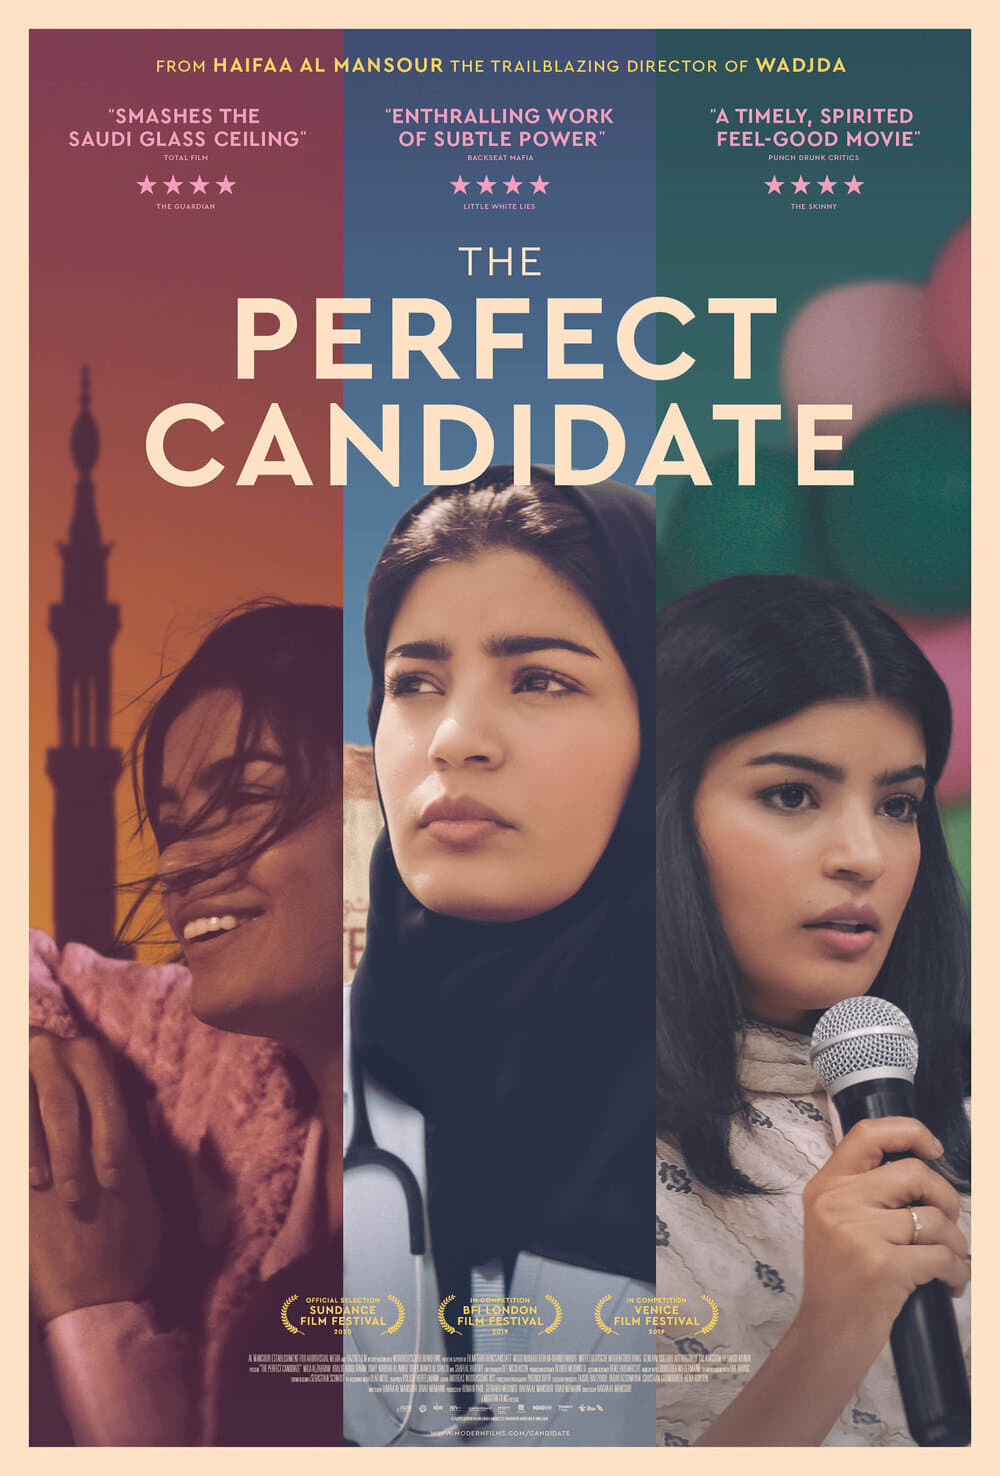 La candidata perfecta (2020)